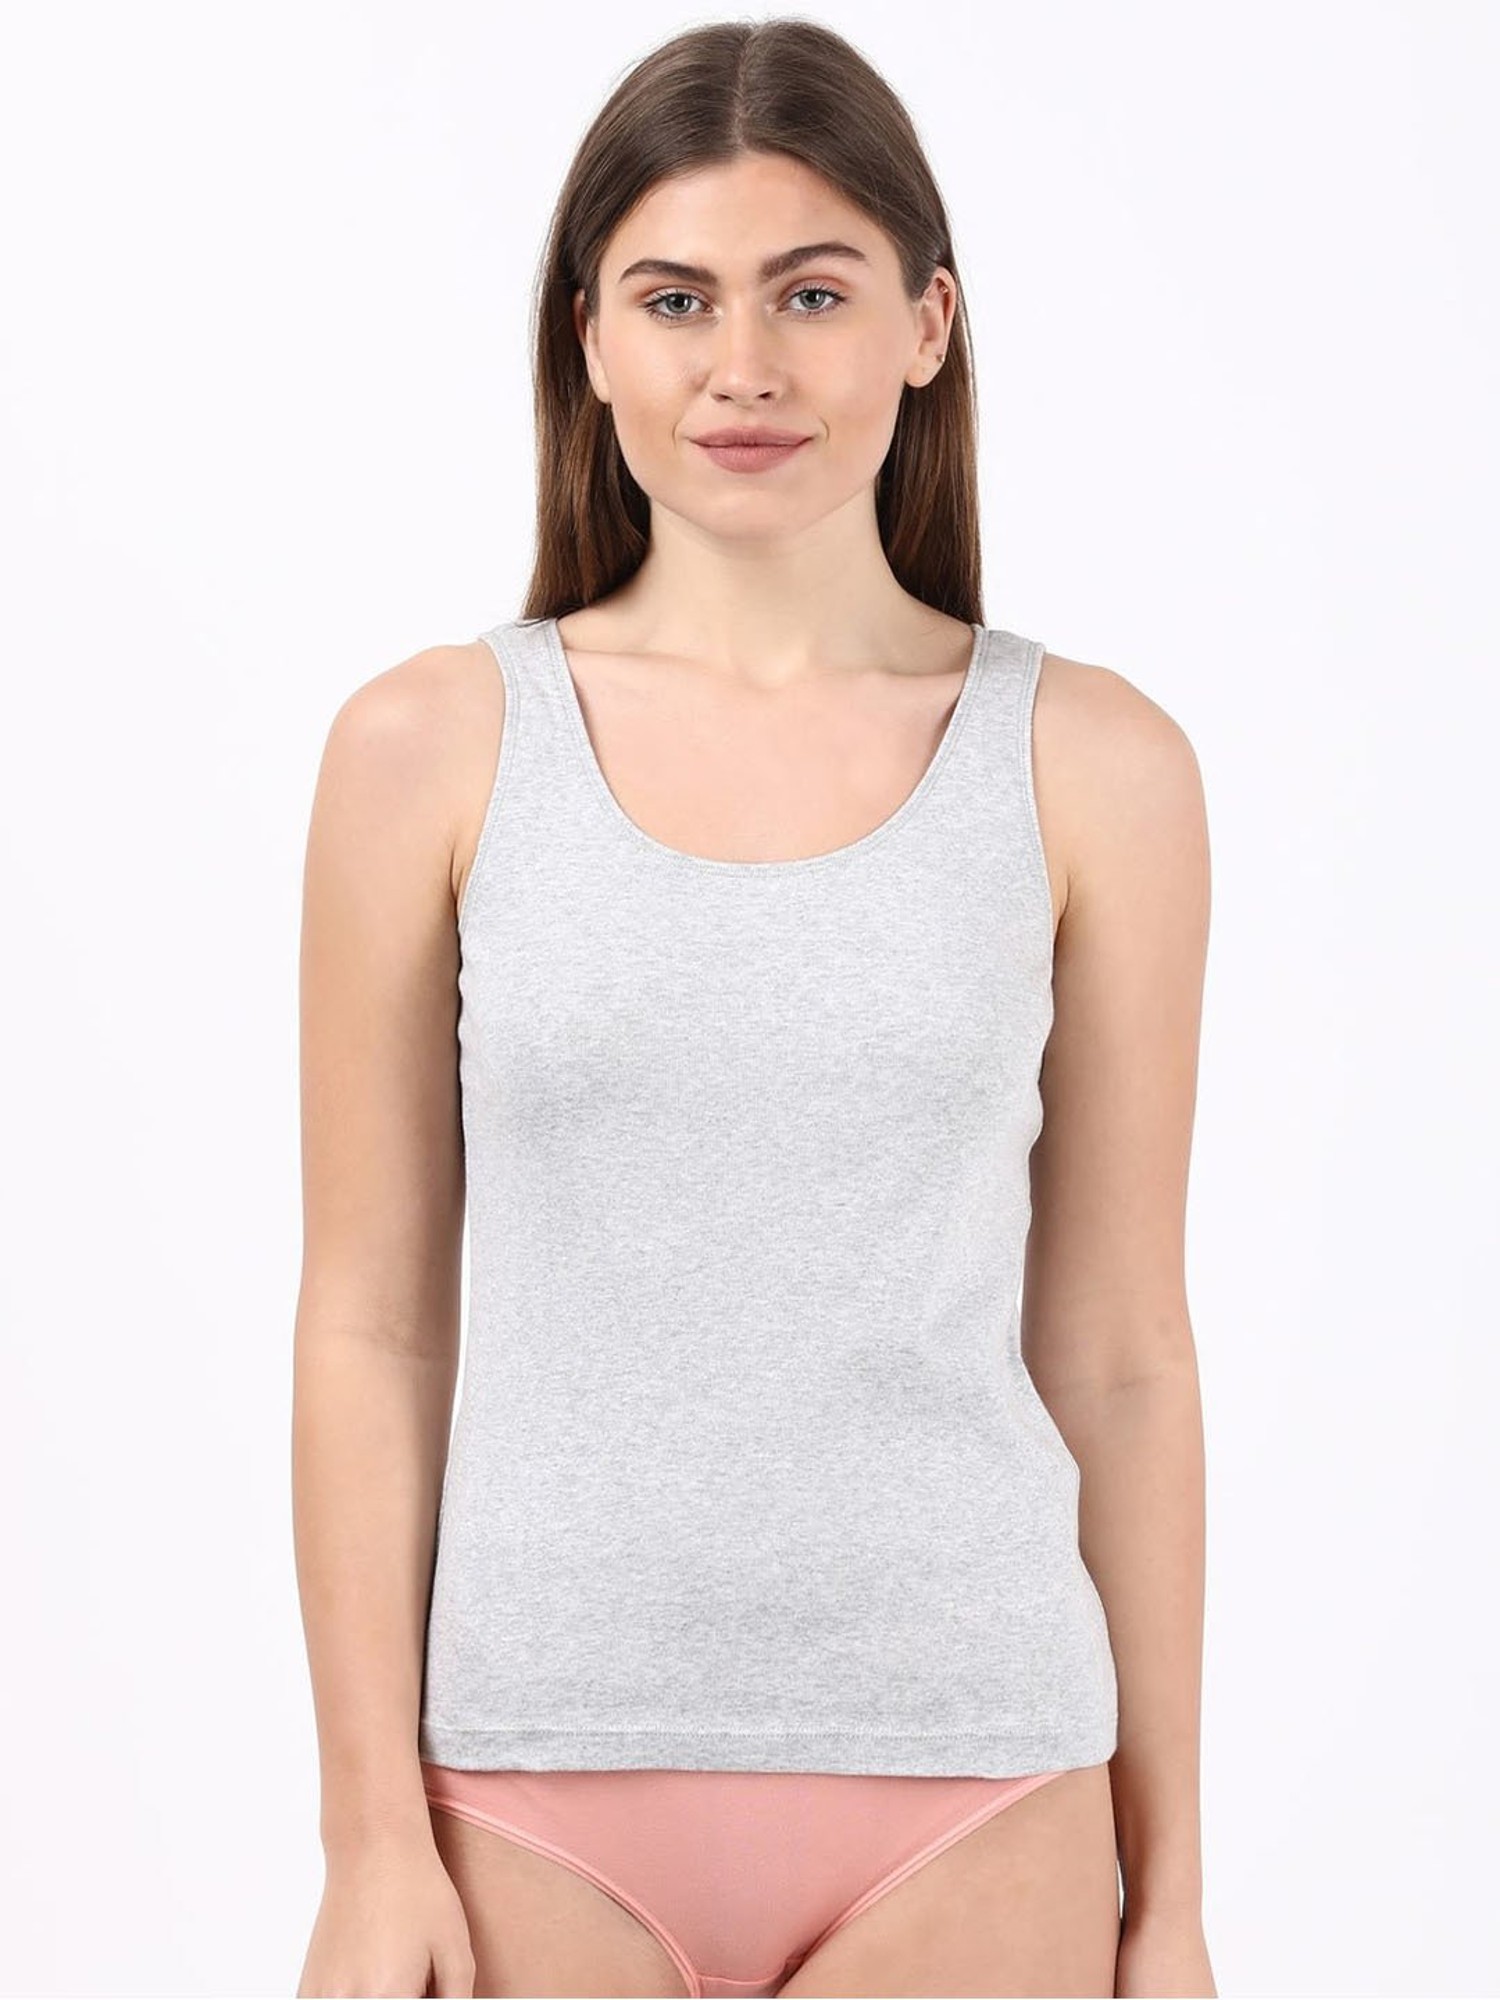 Buy Jockey Steel Grey Full Coverage Camisole for Women's Online @ Tata CLiQ